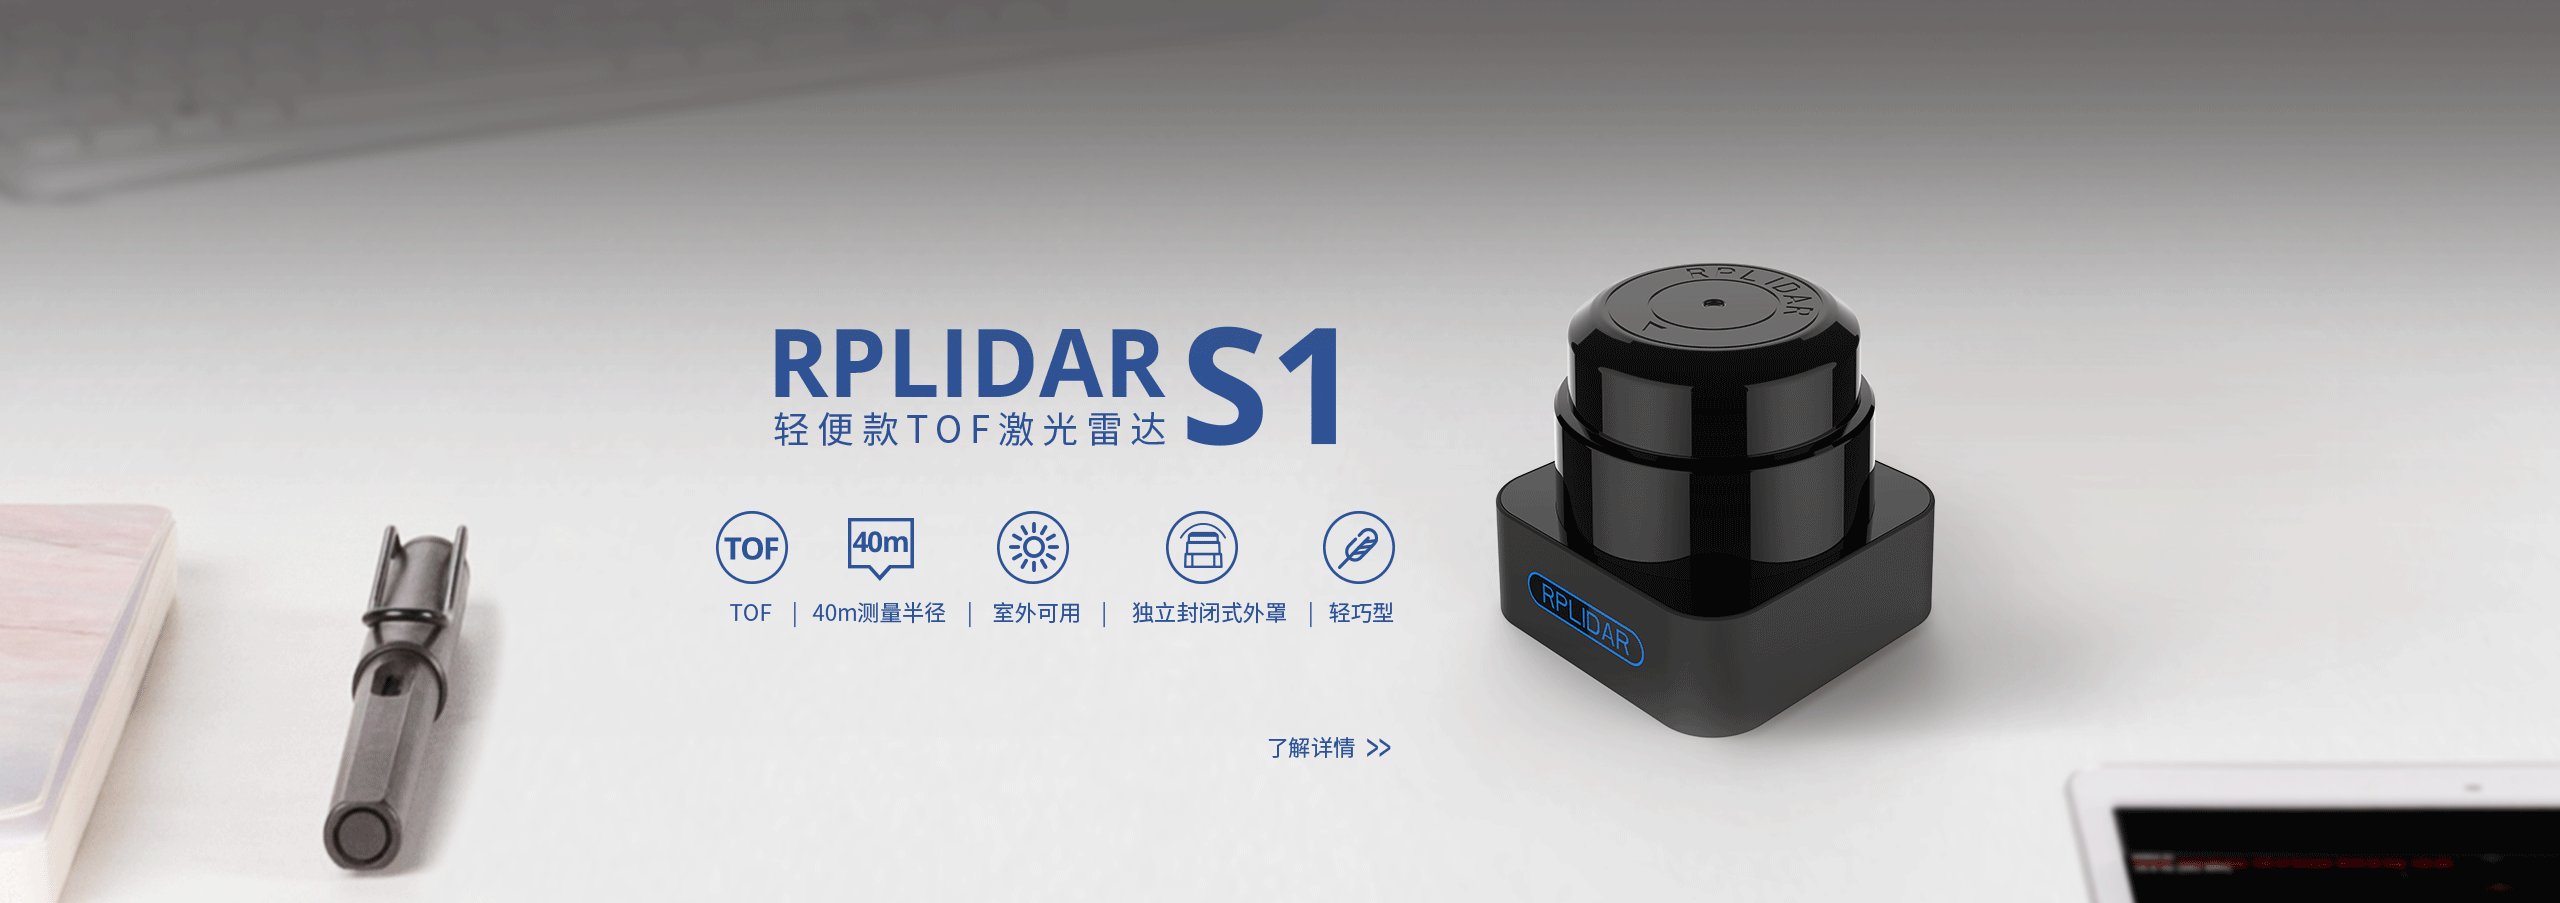 RPLIDAR S1 